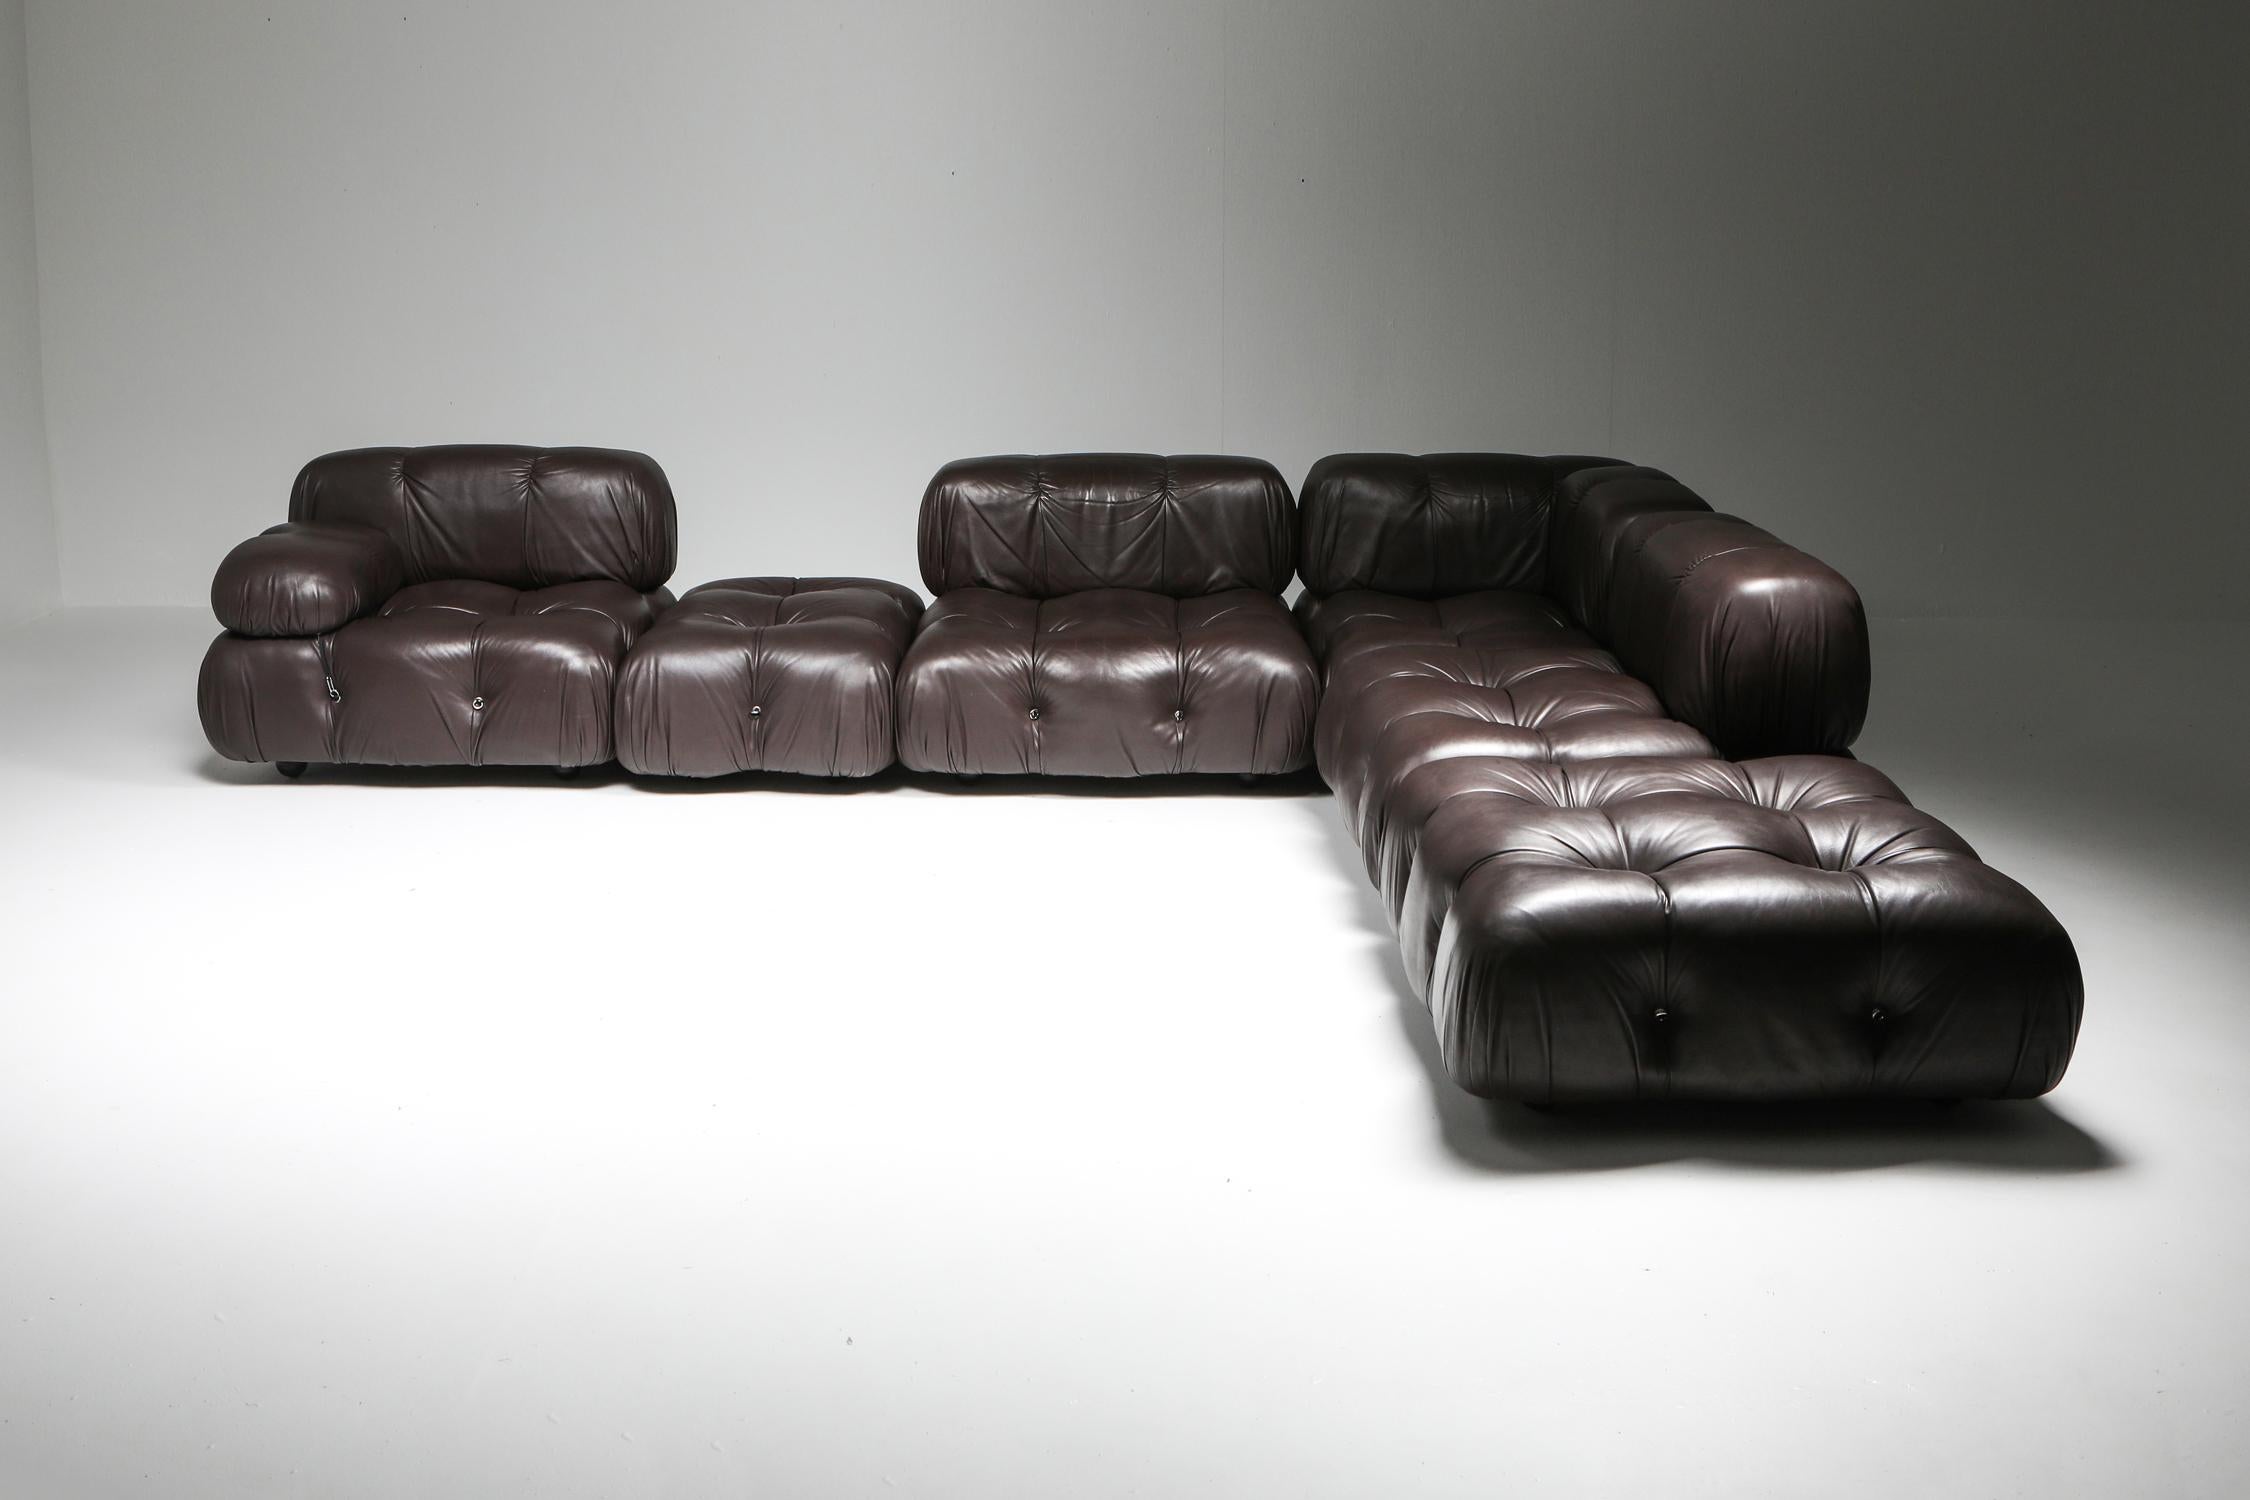 20th Century Mario Bellini's Camaleonda Original Sectional Sofa in Chocolate Brown Leather